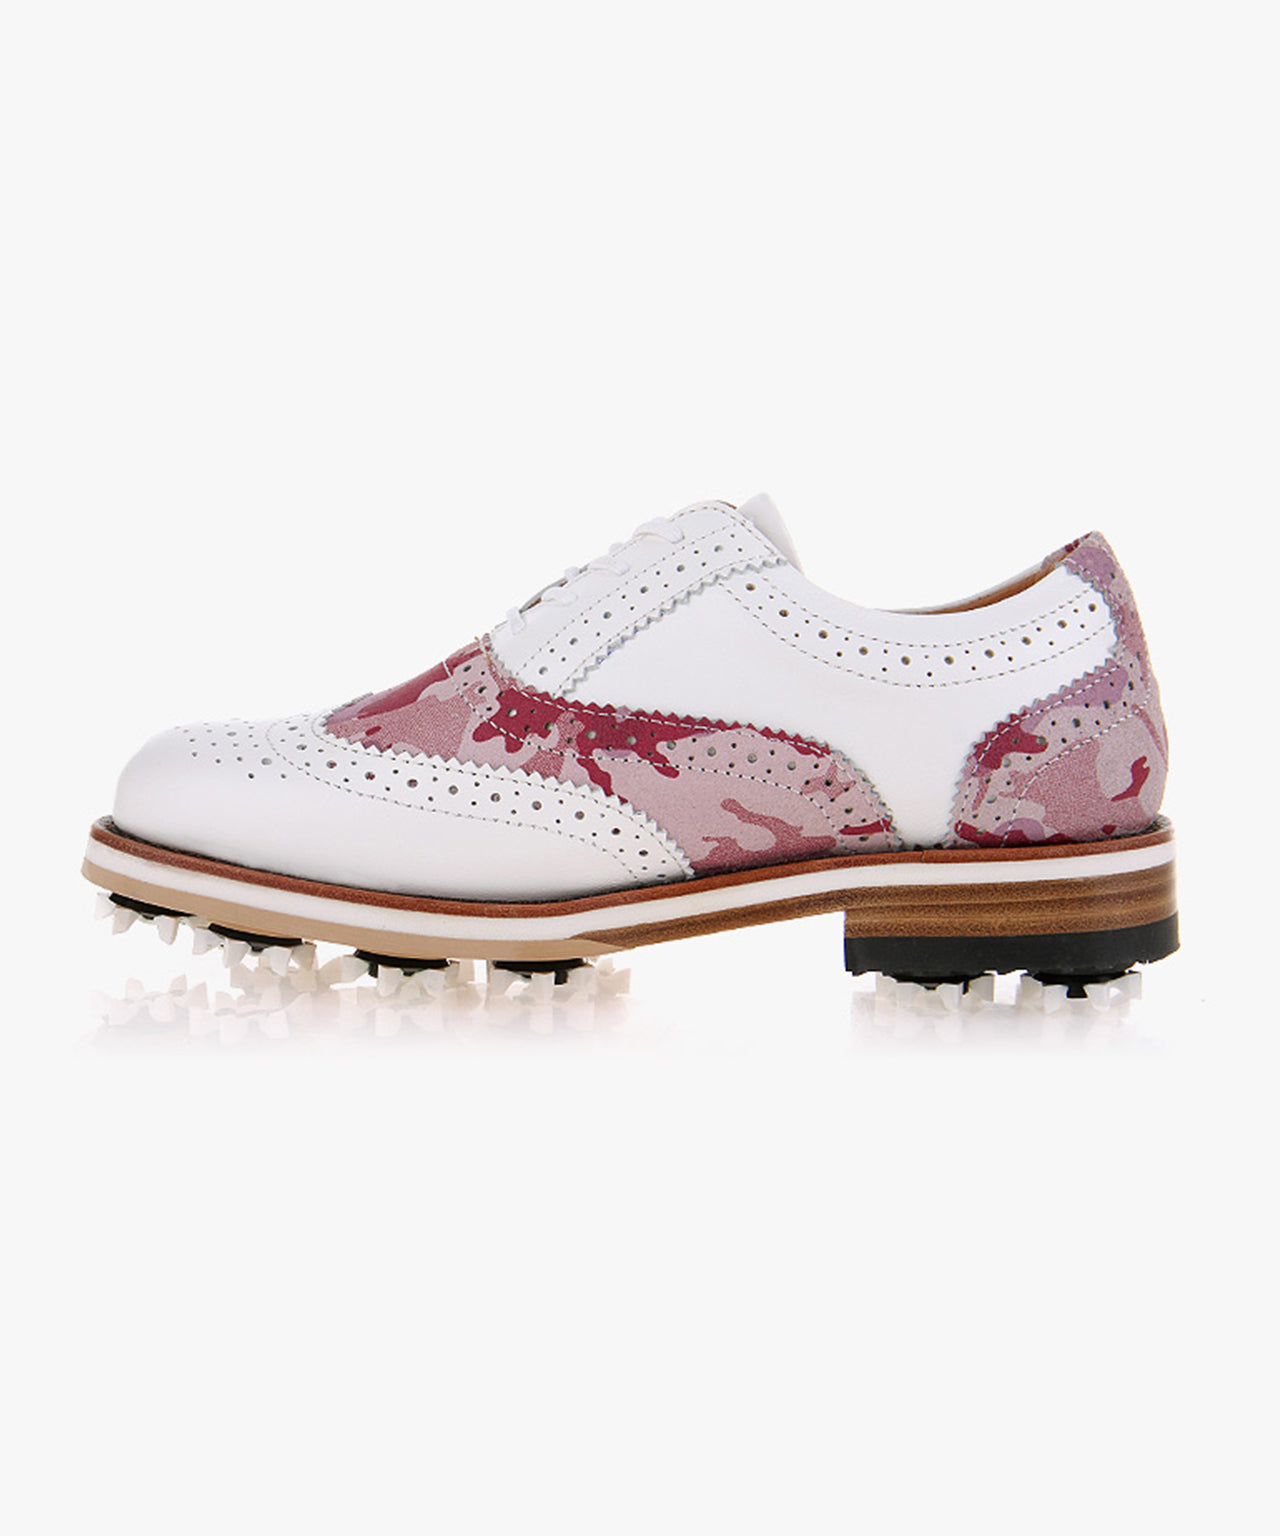 HENRY STUART Mysuit Classic Women's Spike Golf Shoes 104 - Pink Camo